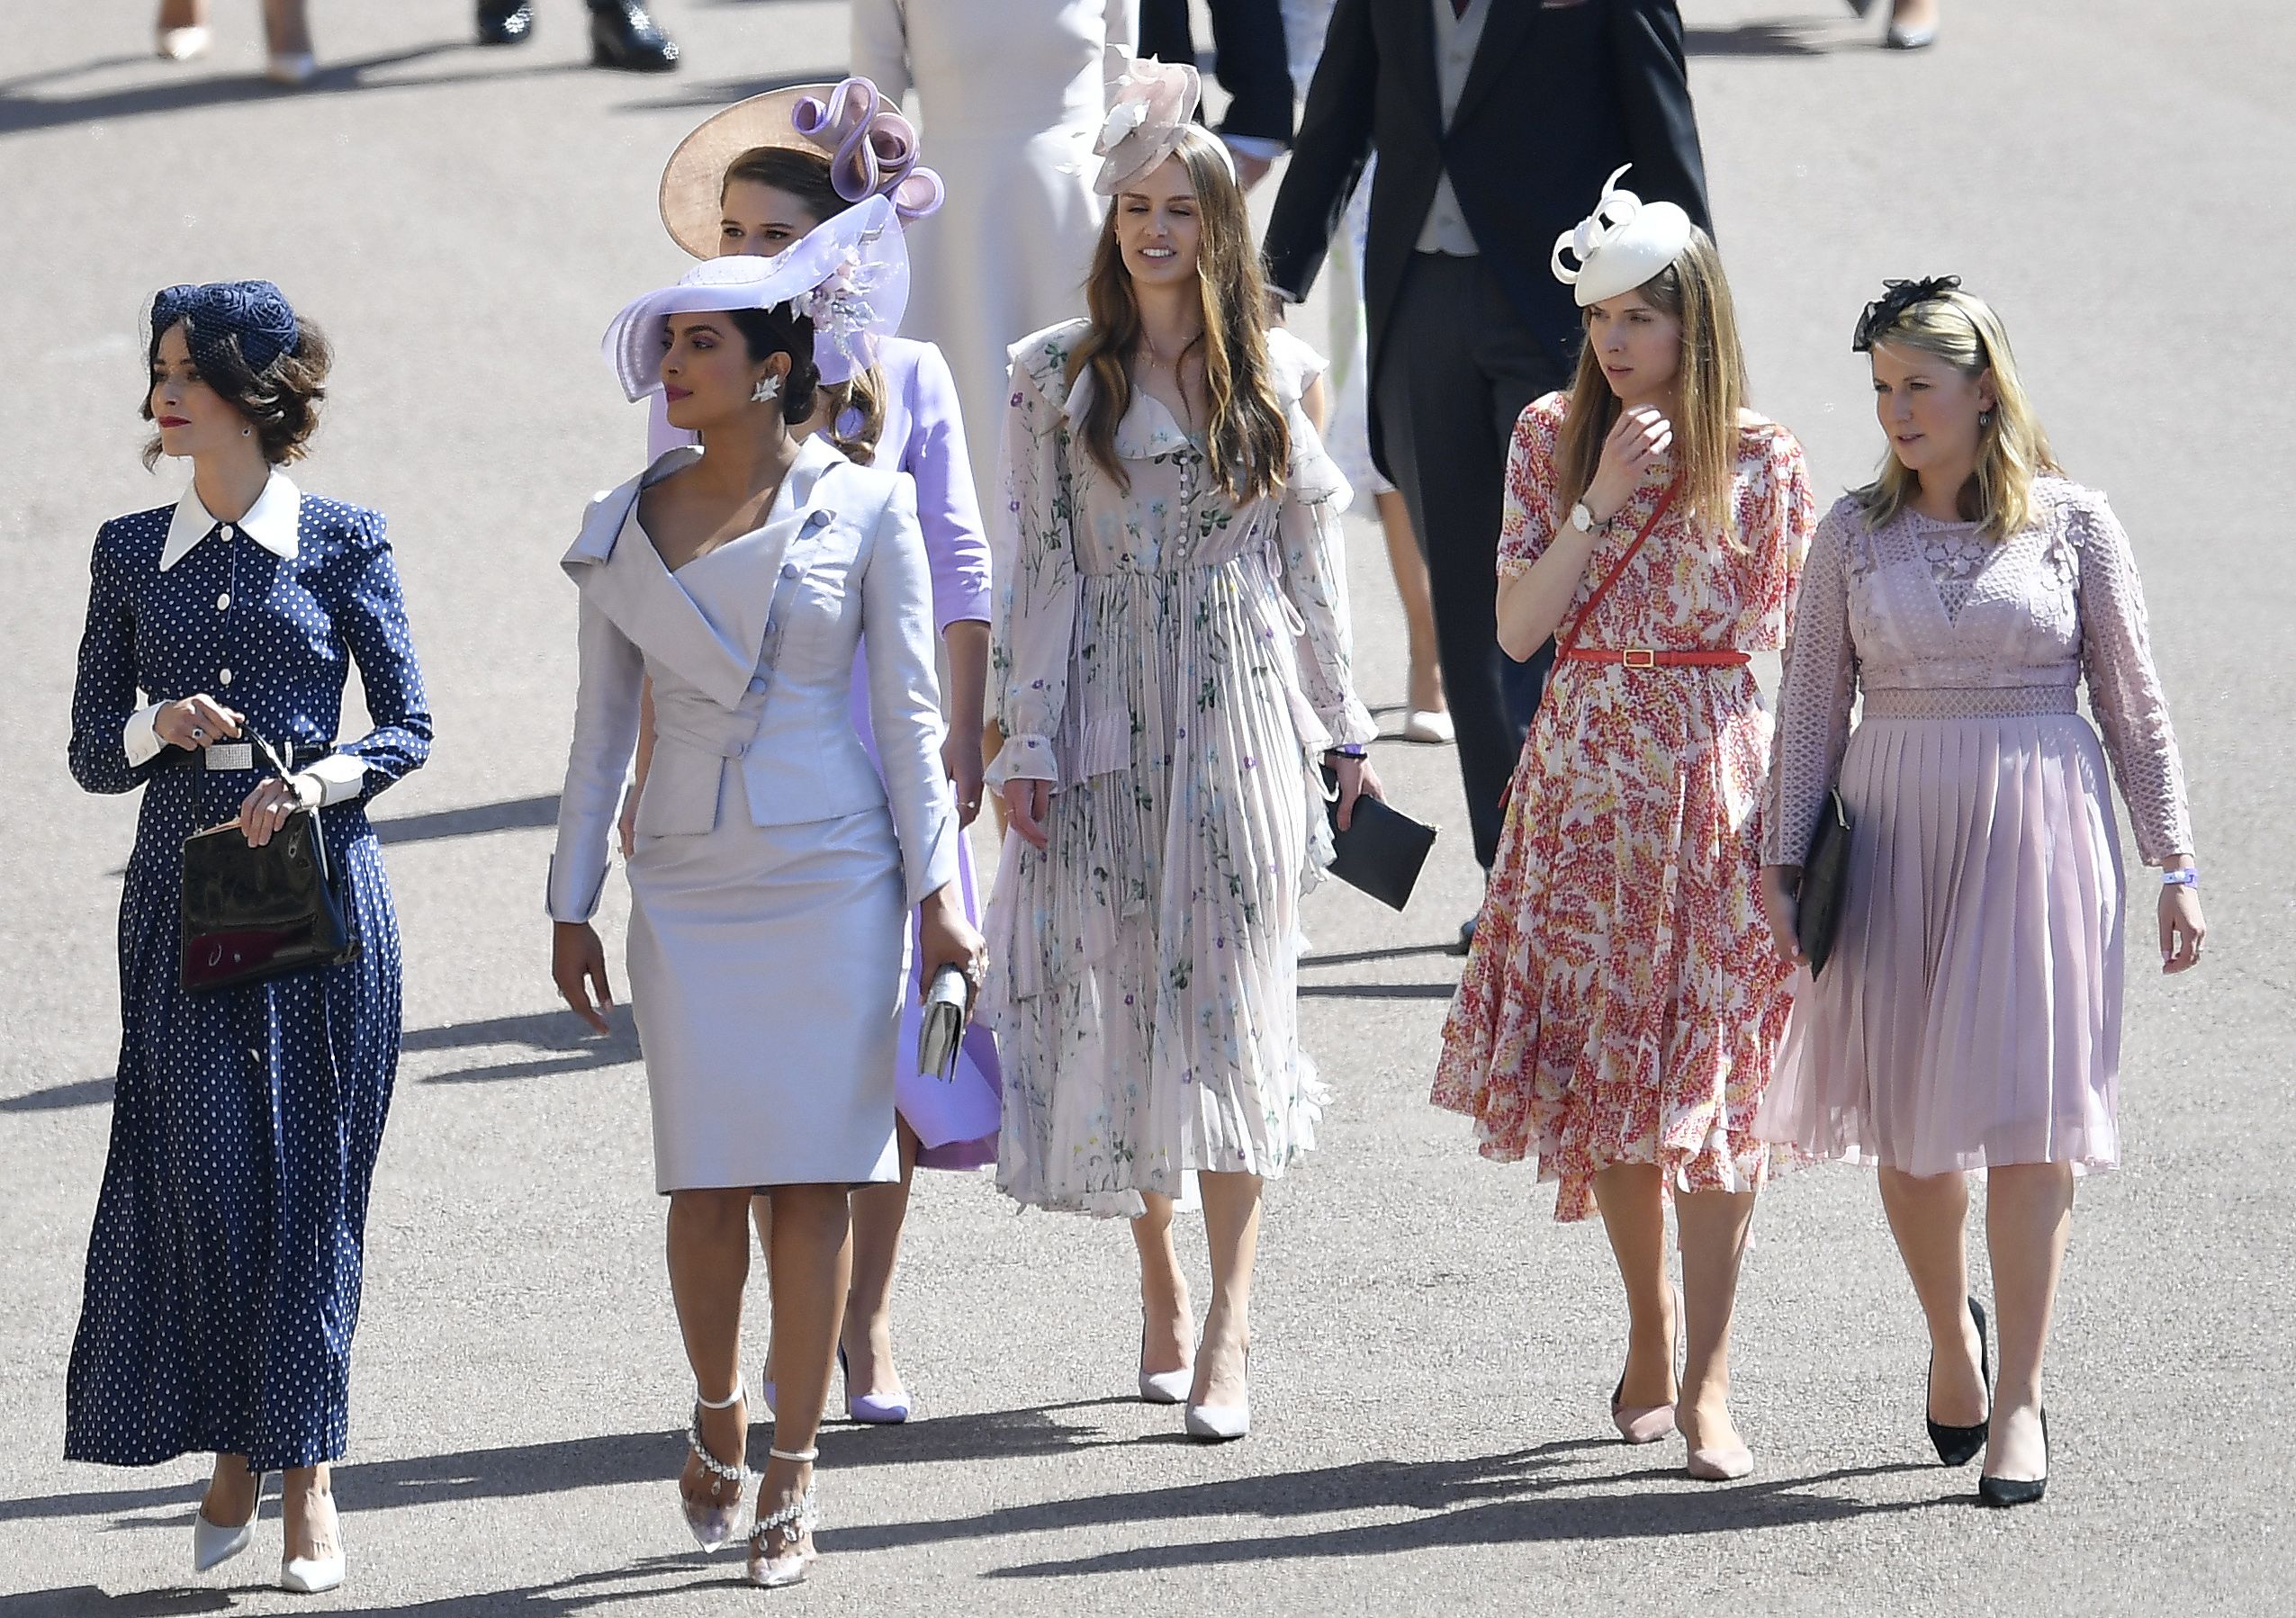 Royal Wedding: Hats on Oprah, Priyanka Chopra, more – The Hollywood Reporter